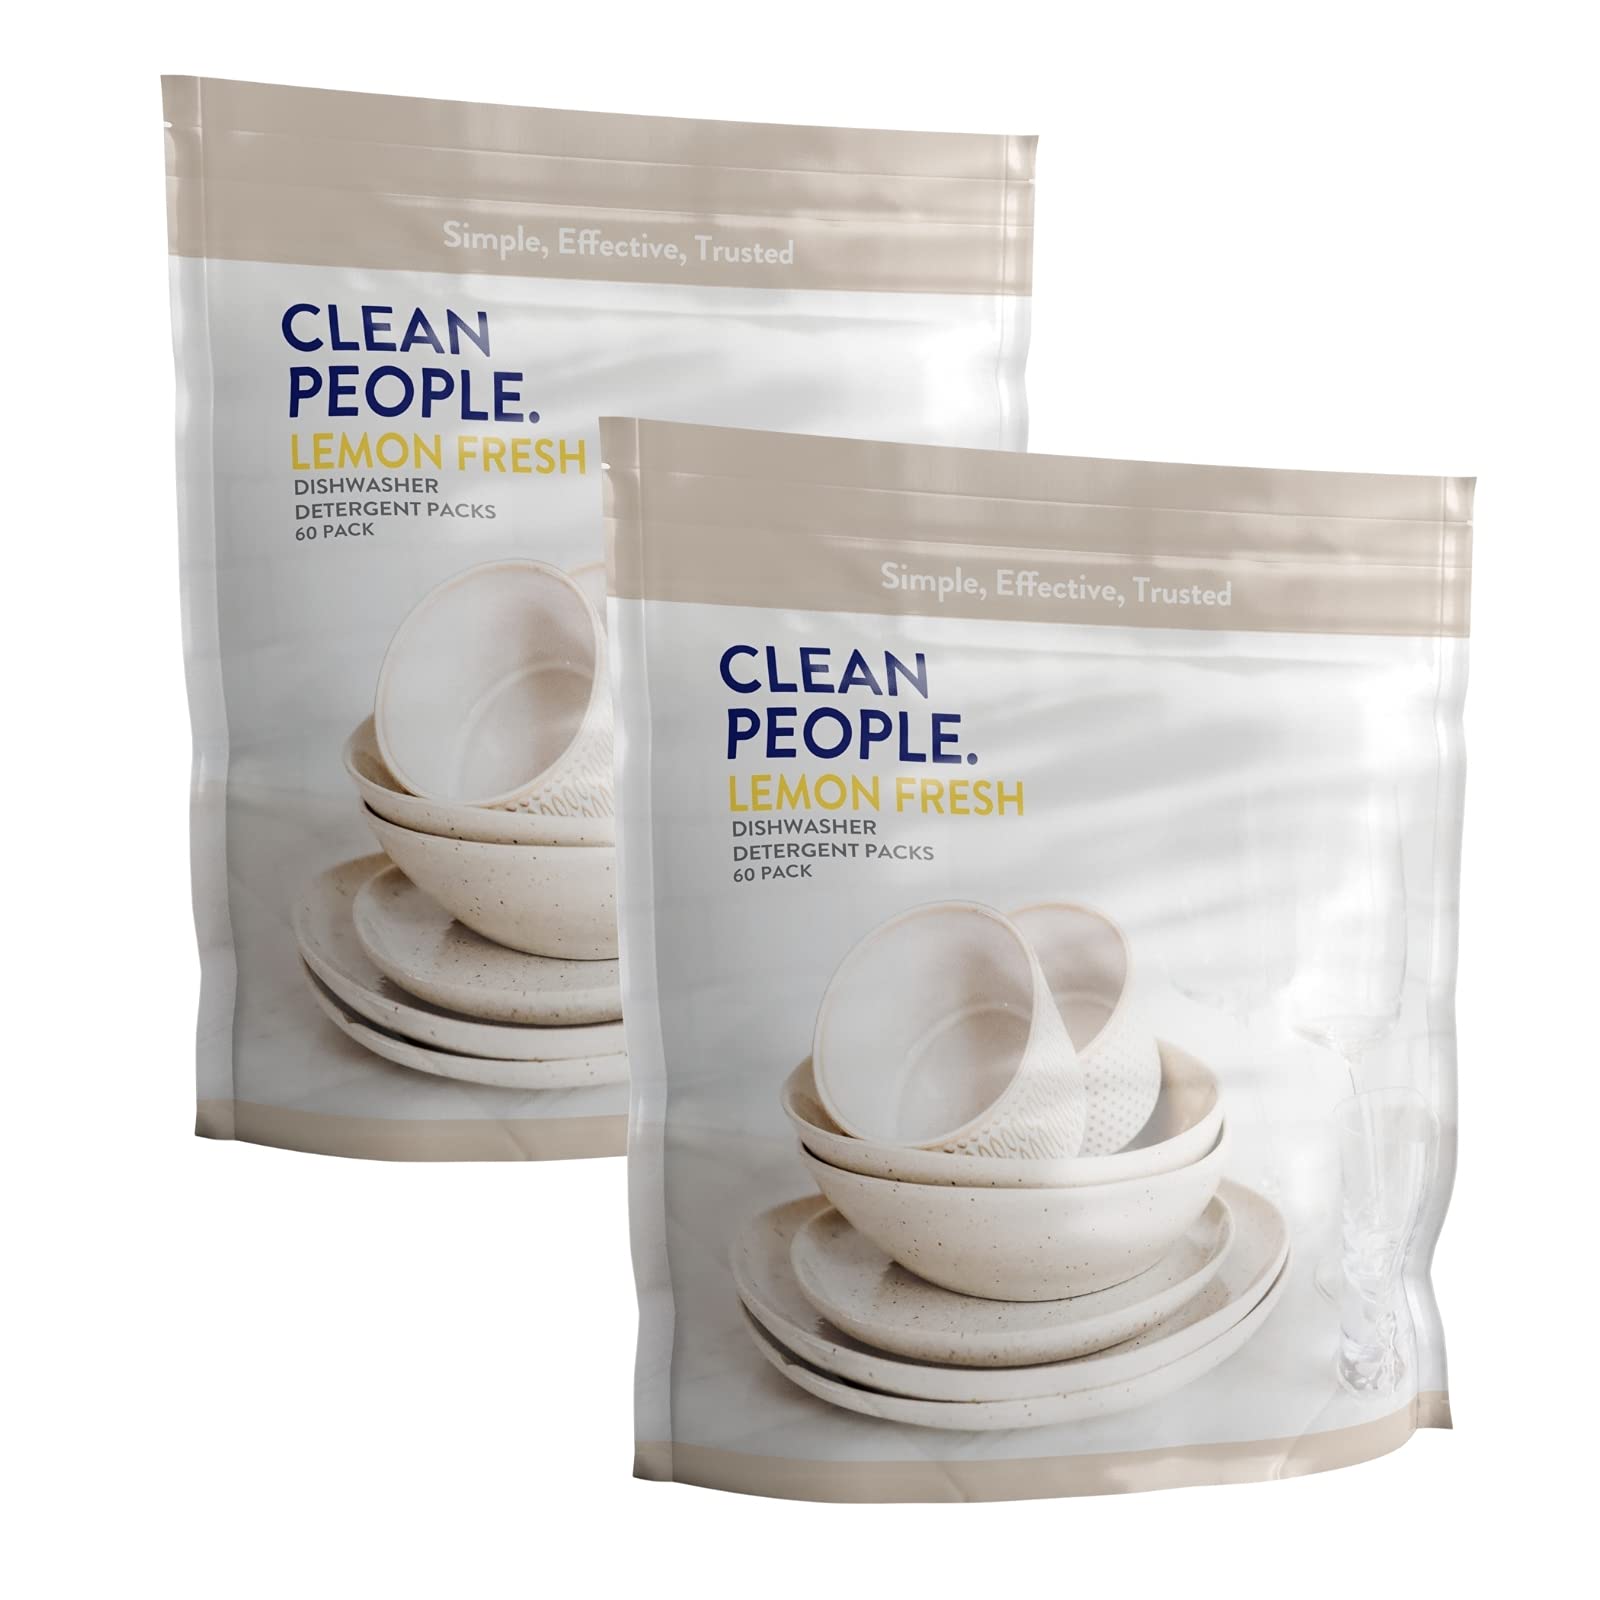 Clean People Dishwasher Detergent Packs Lemon Fresh 120ct (2 x 60packs)